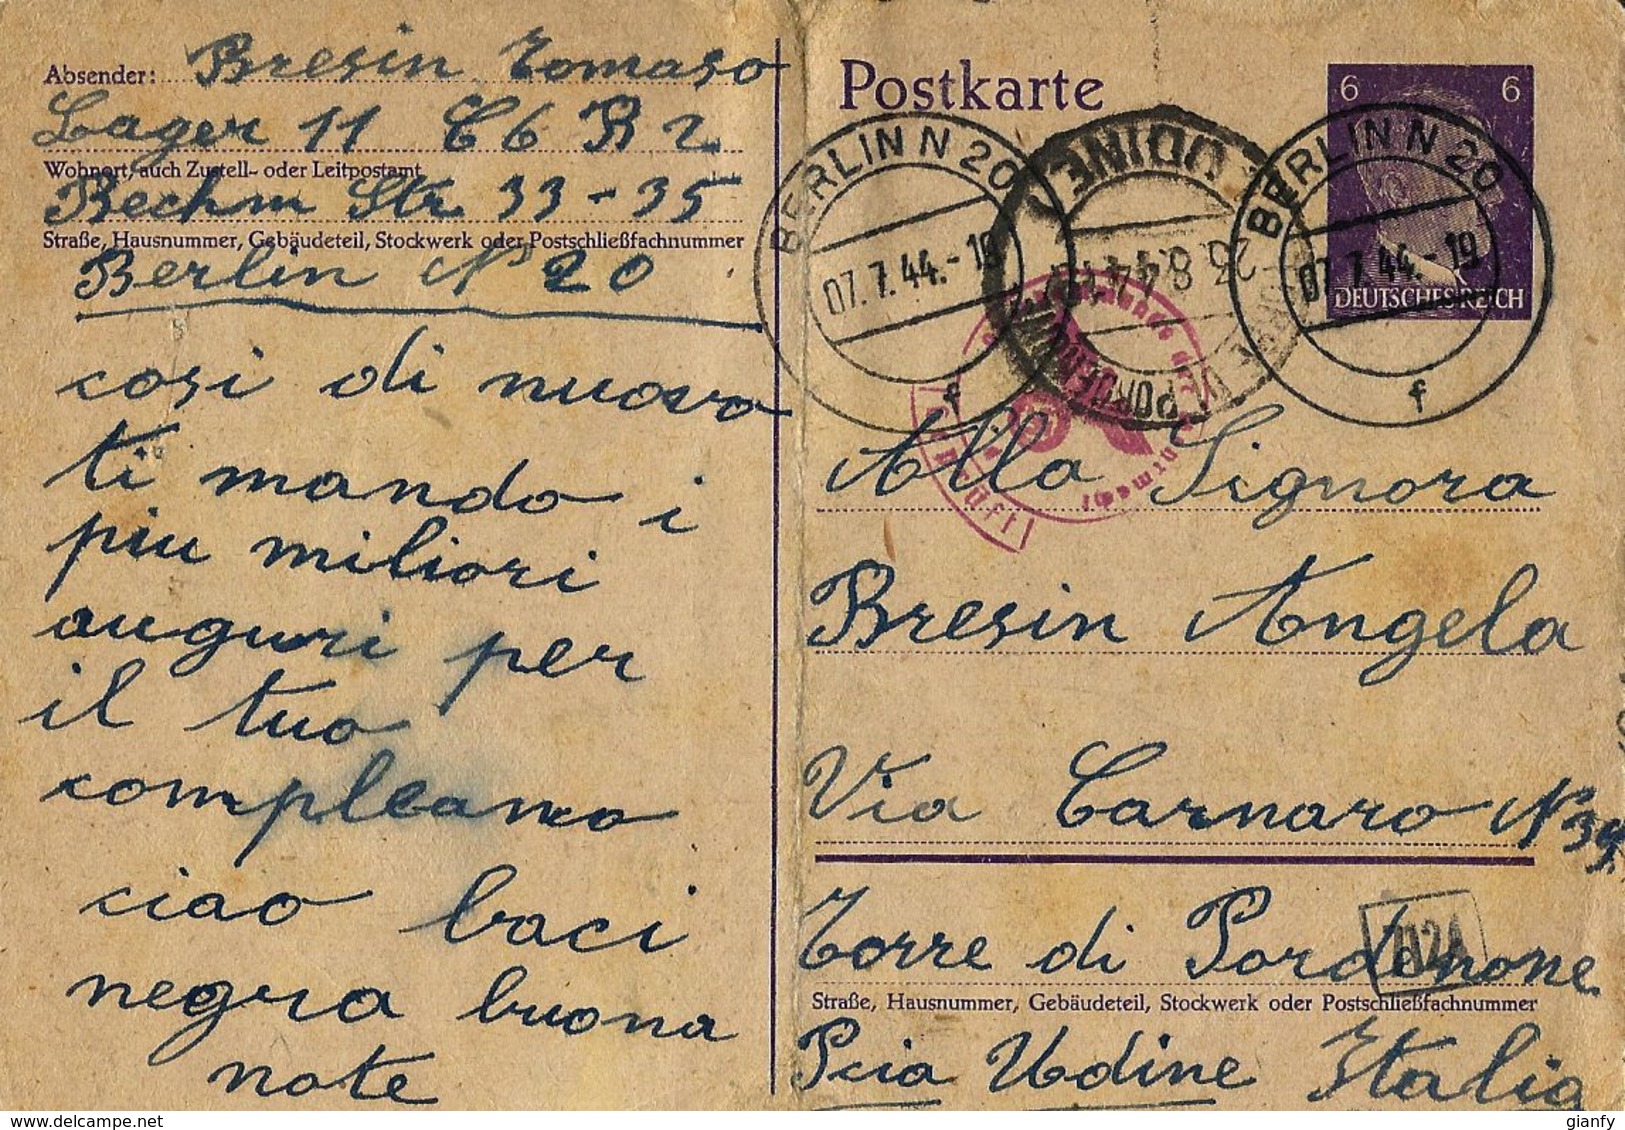 PRIGIONIERO LAVORATORE WERKLAGER BERLIN GERMANY 1944 PORDENONE TORRE - Military Mail (PM)